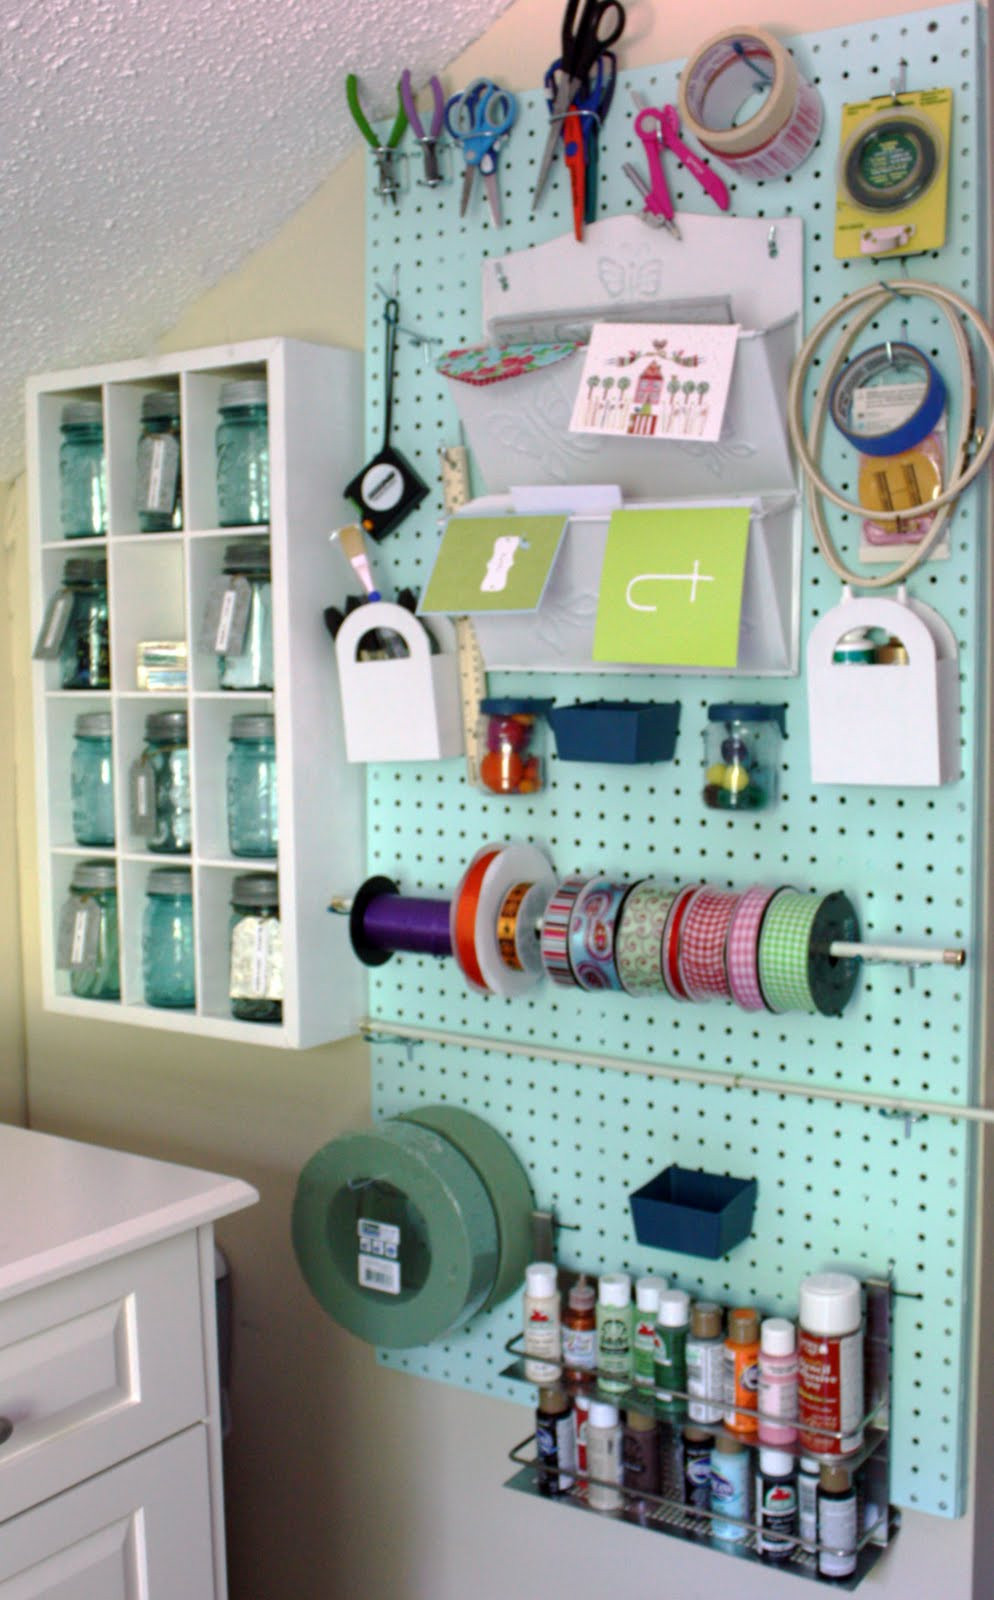 Craft Room Organization Ideas
 Simple Ideas to Organize a Craft Room